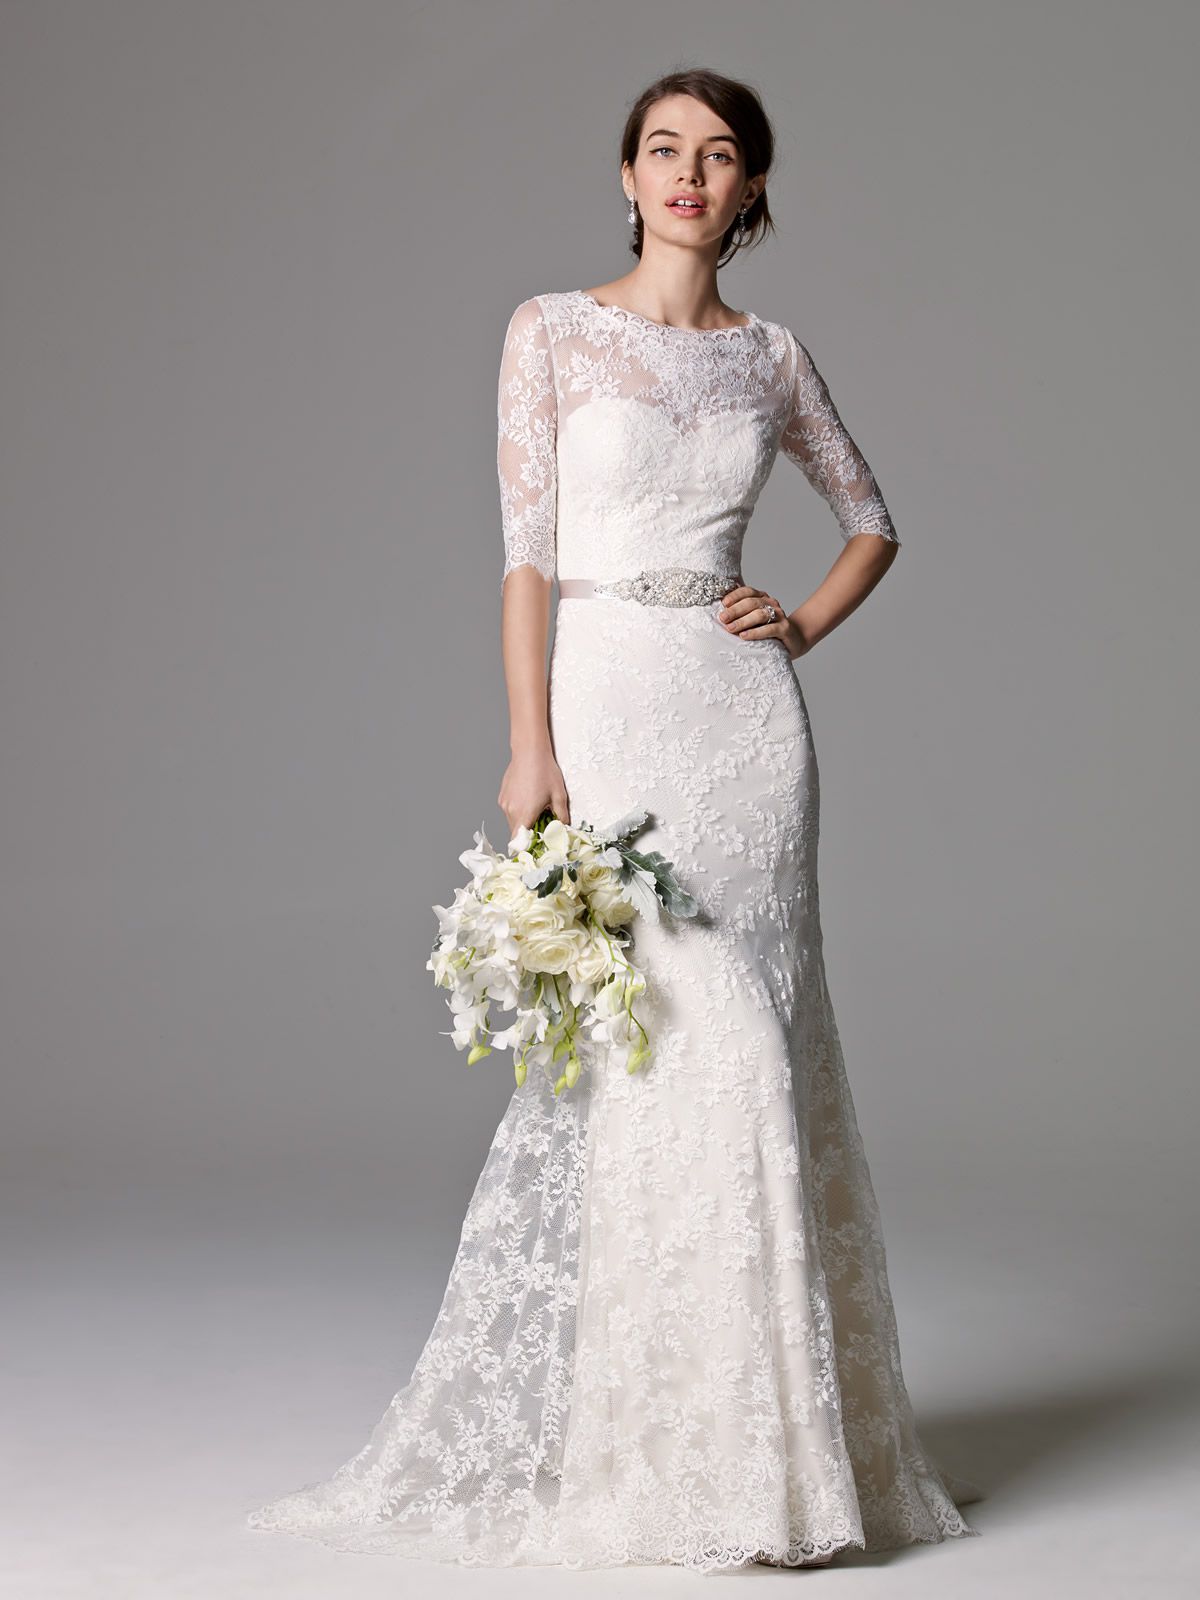 A model wearing a lace wedding dress